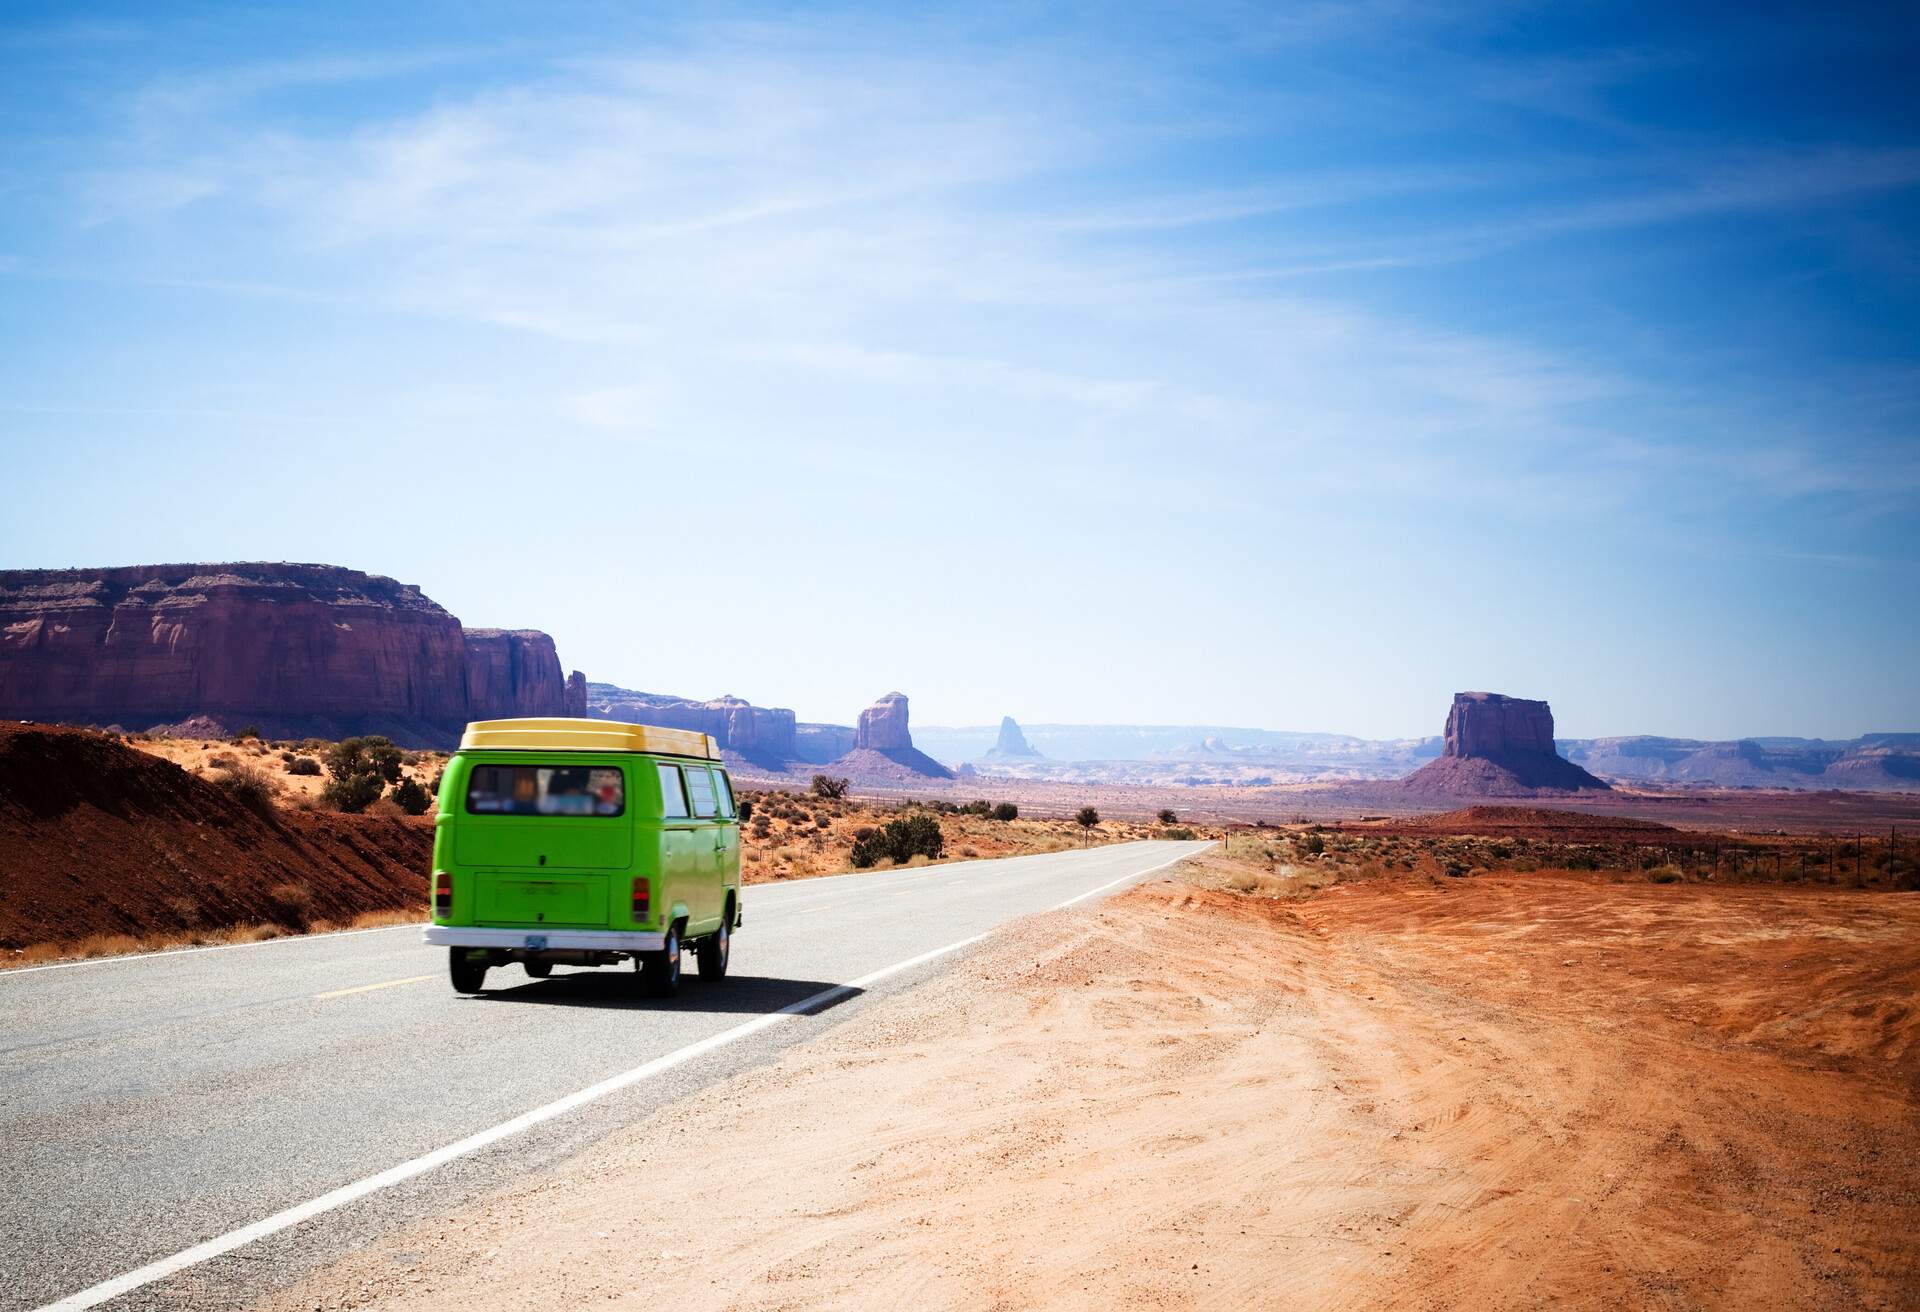 DEST_USA_ARIZONA_UTAH-Green van driving on the Highway 163 in the Monument Valley between Utah and Arizona-GettyImages-161842456